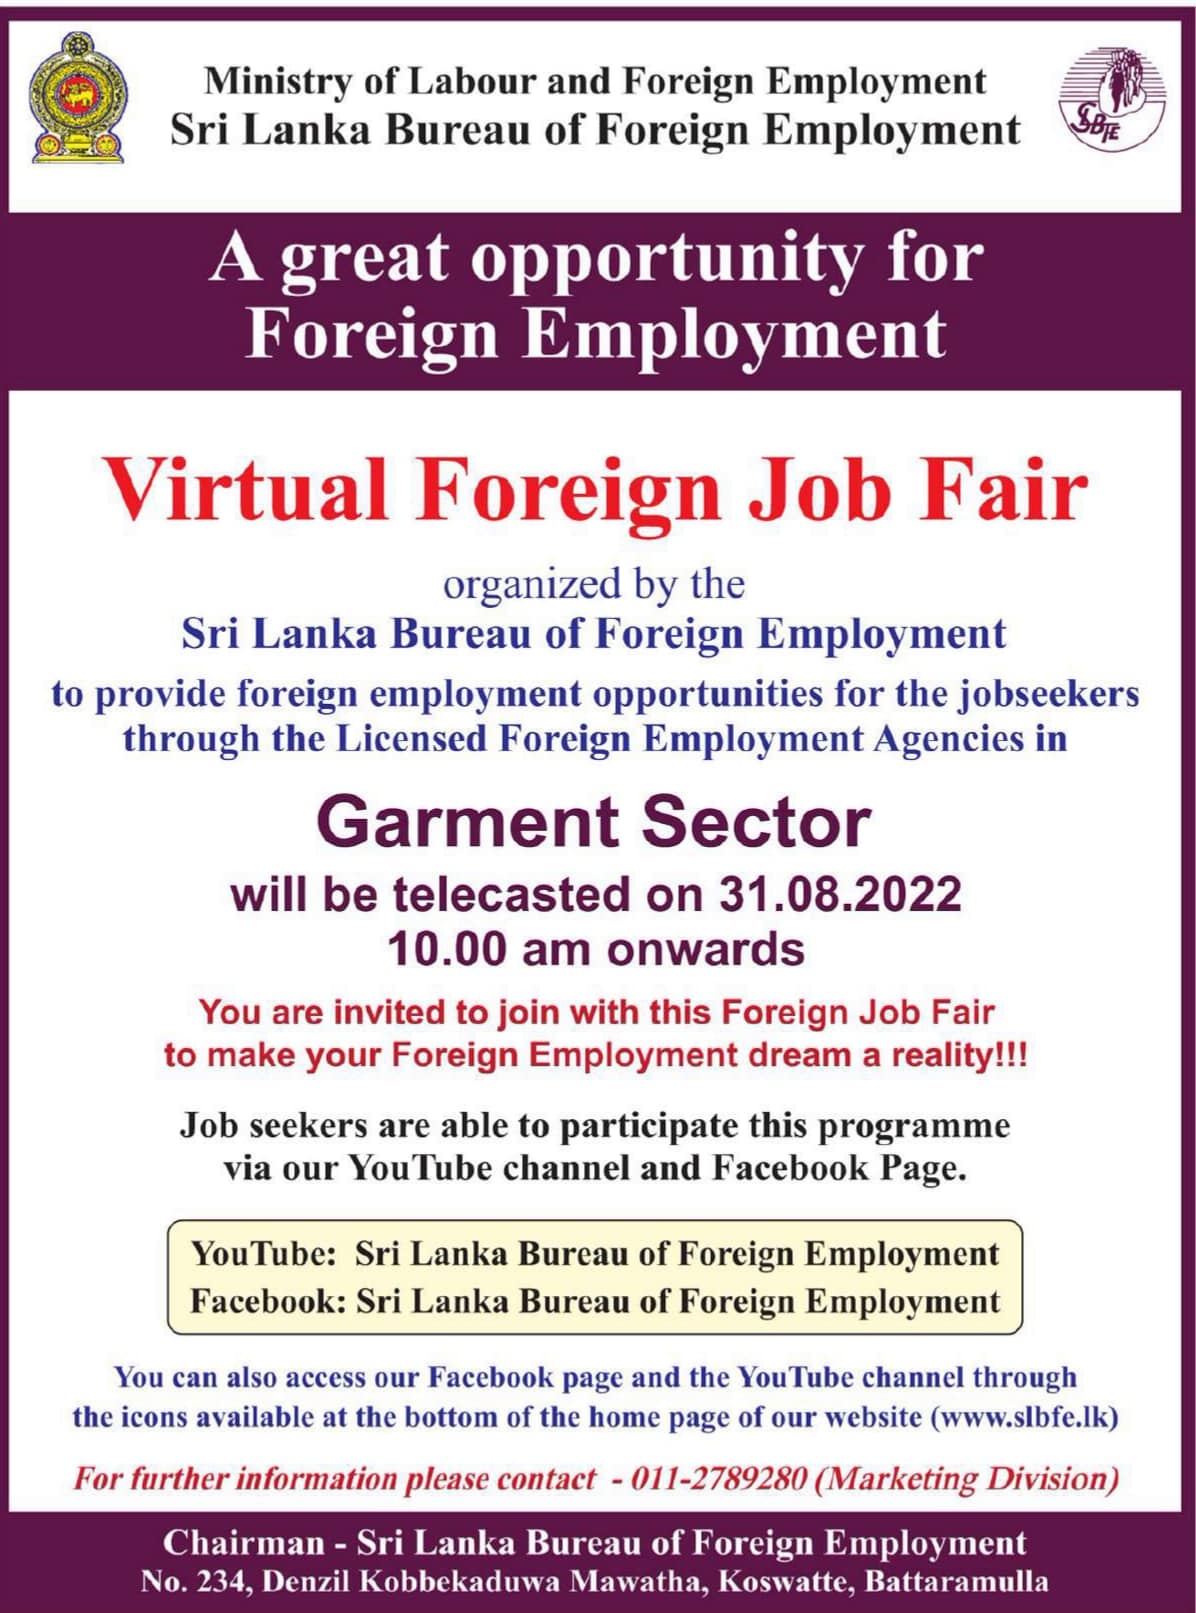 Online Virtual Foreign Job Fair 2022 - SLBFE Sri Lanka Bureau of Foreign Employment